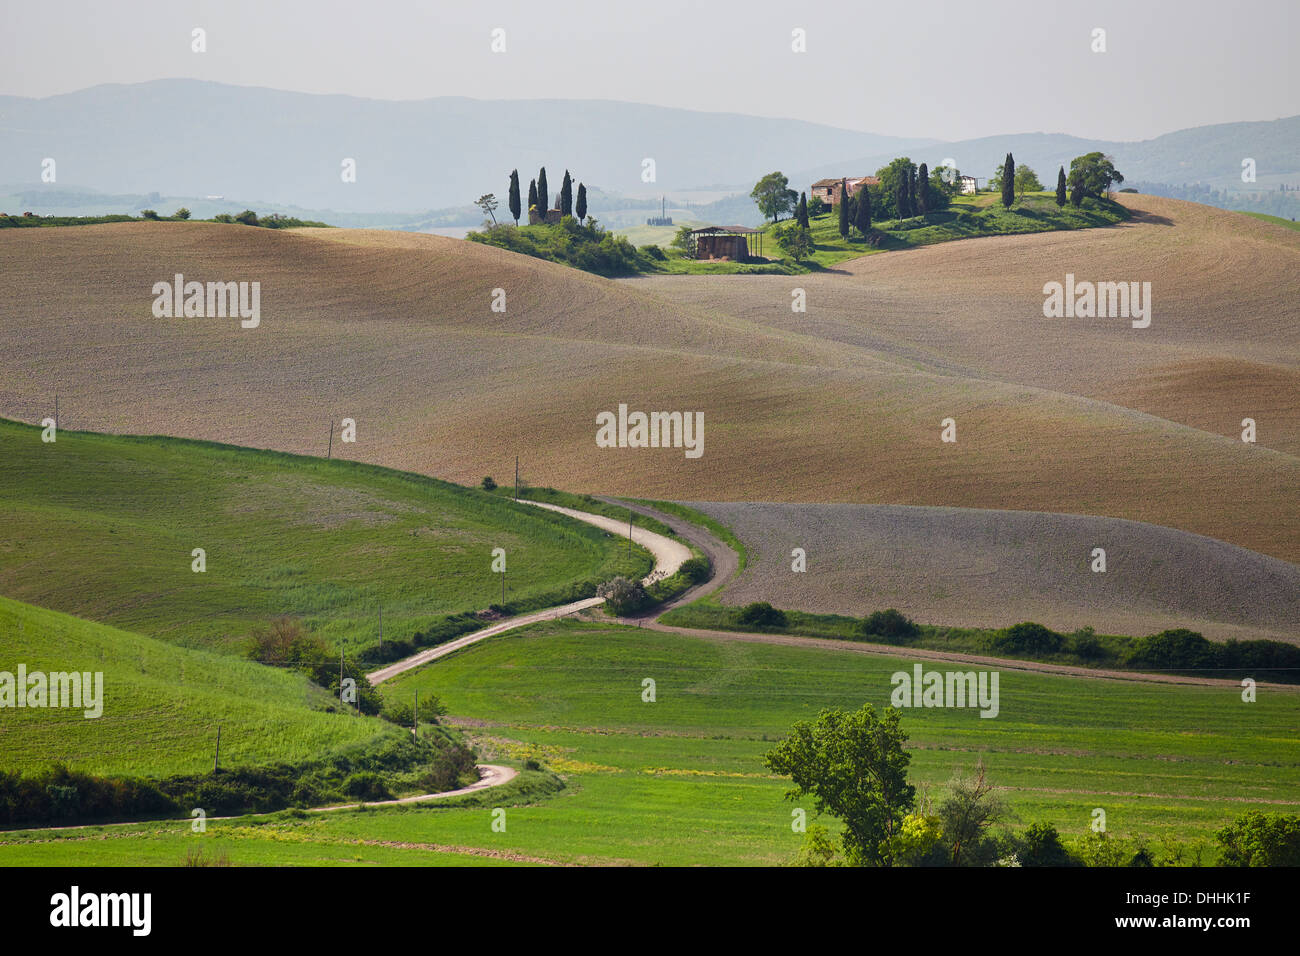 Hilly landscape of the Crete Senesi region, Taverne d'Arbia, Province of Siena, Tuscany, Italy Stock Photo